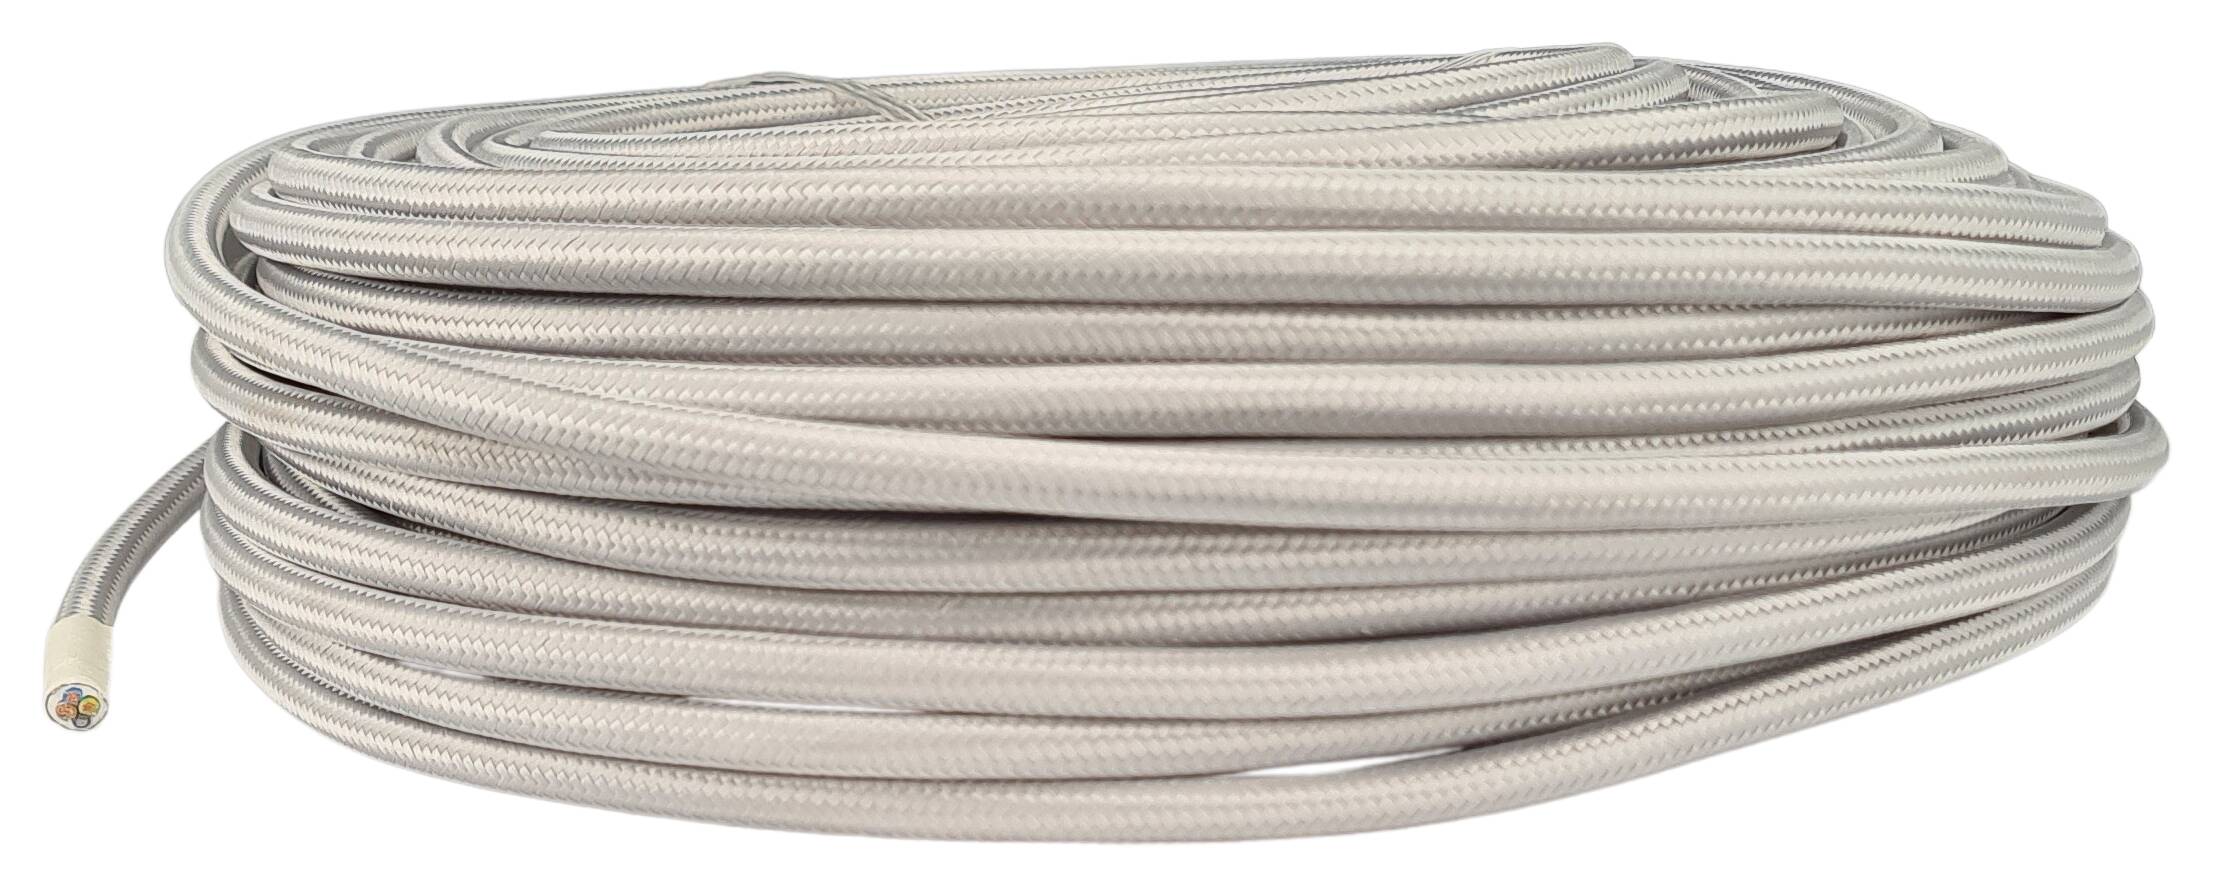 Kabel m. Stahlseil 3G 1,00 HO3VV-F AD = 6,4 mm PVC  textilummantelt RAL 7044 silber glänzend